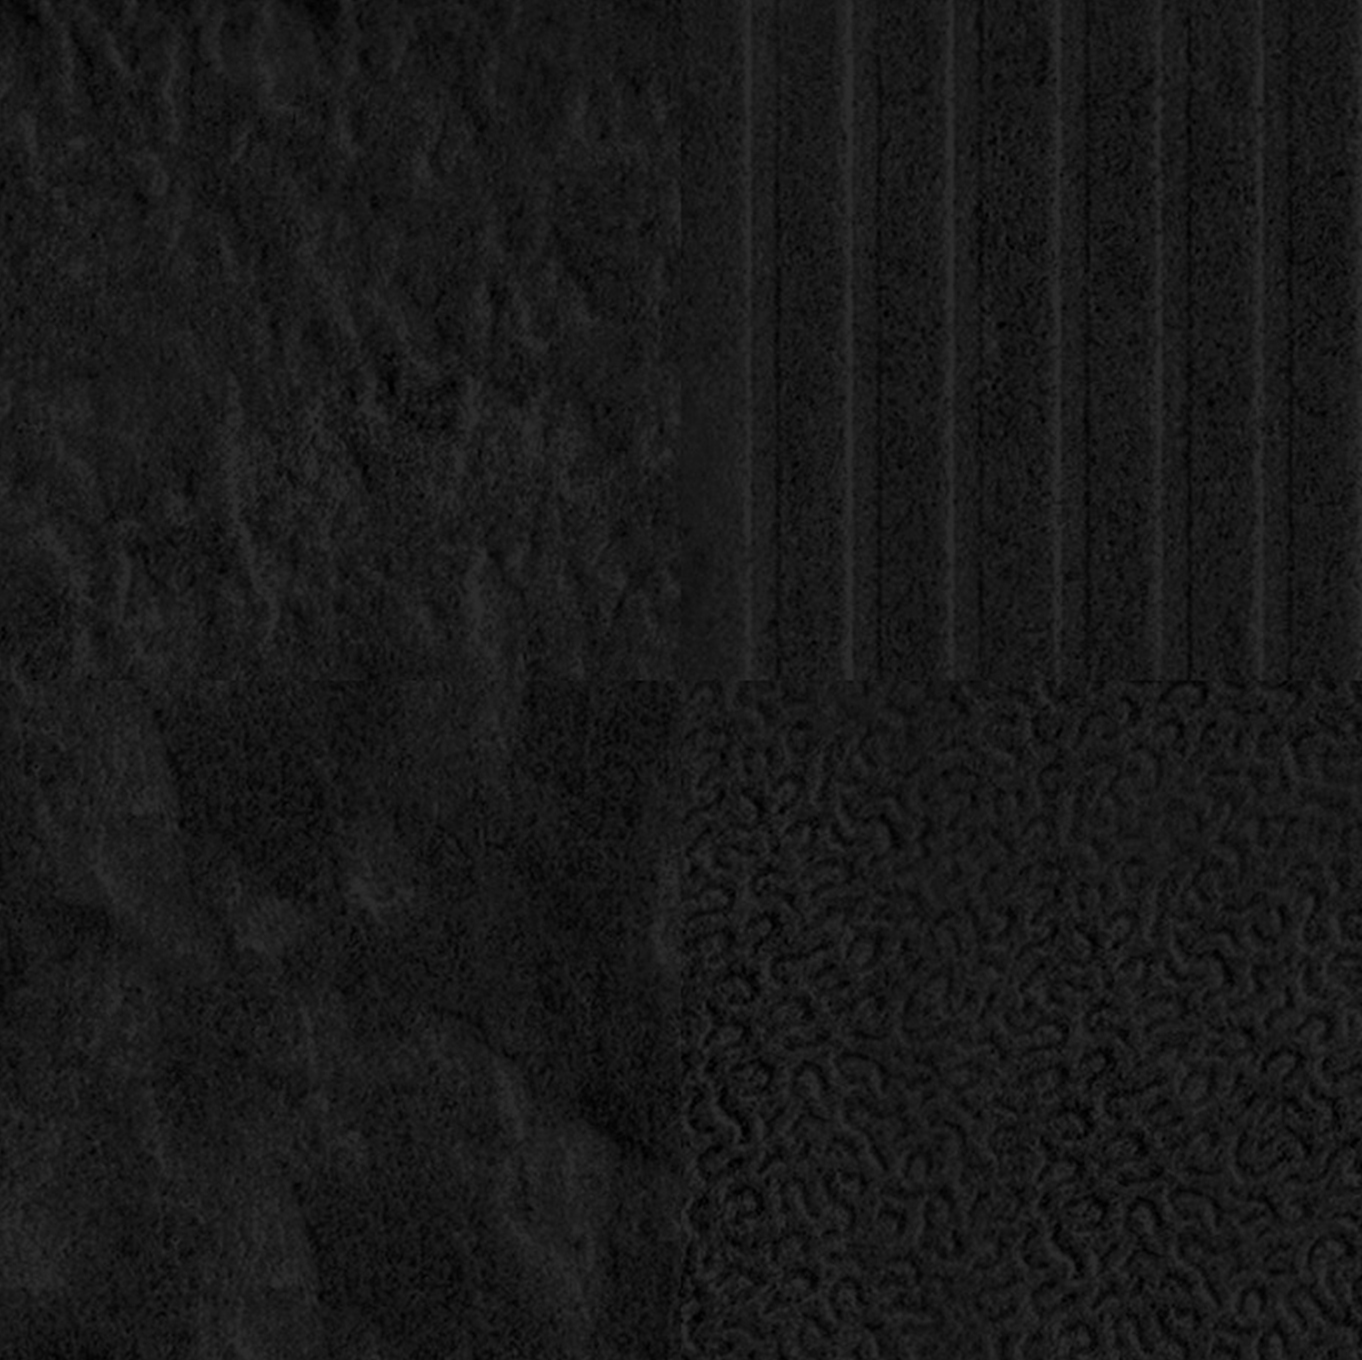 black paper texture seamless